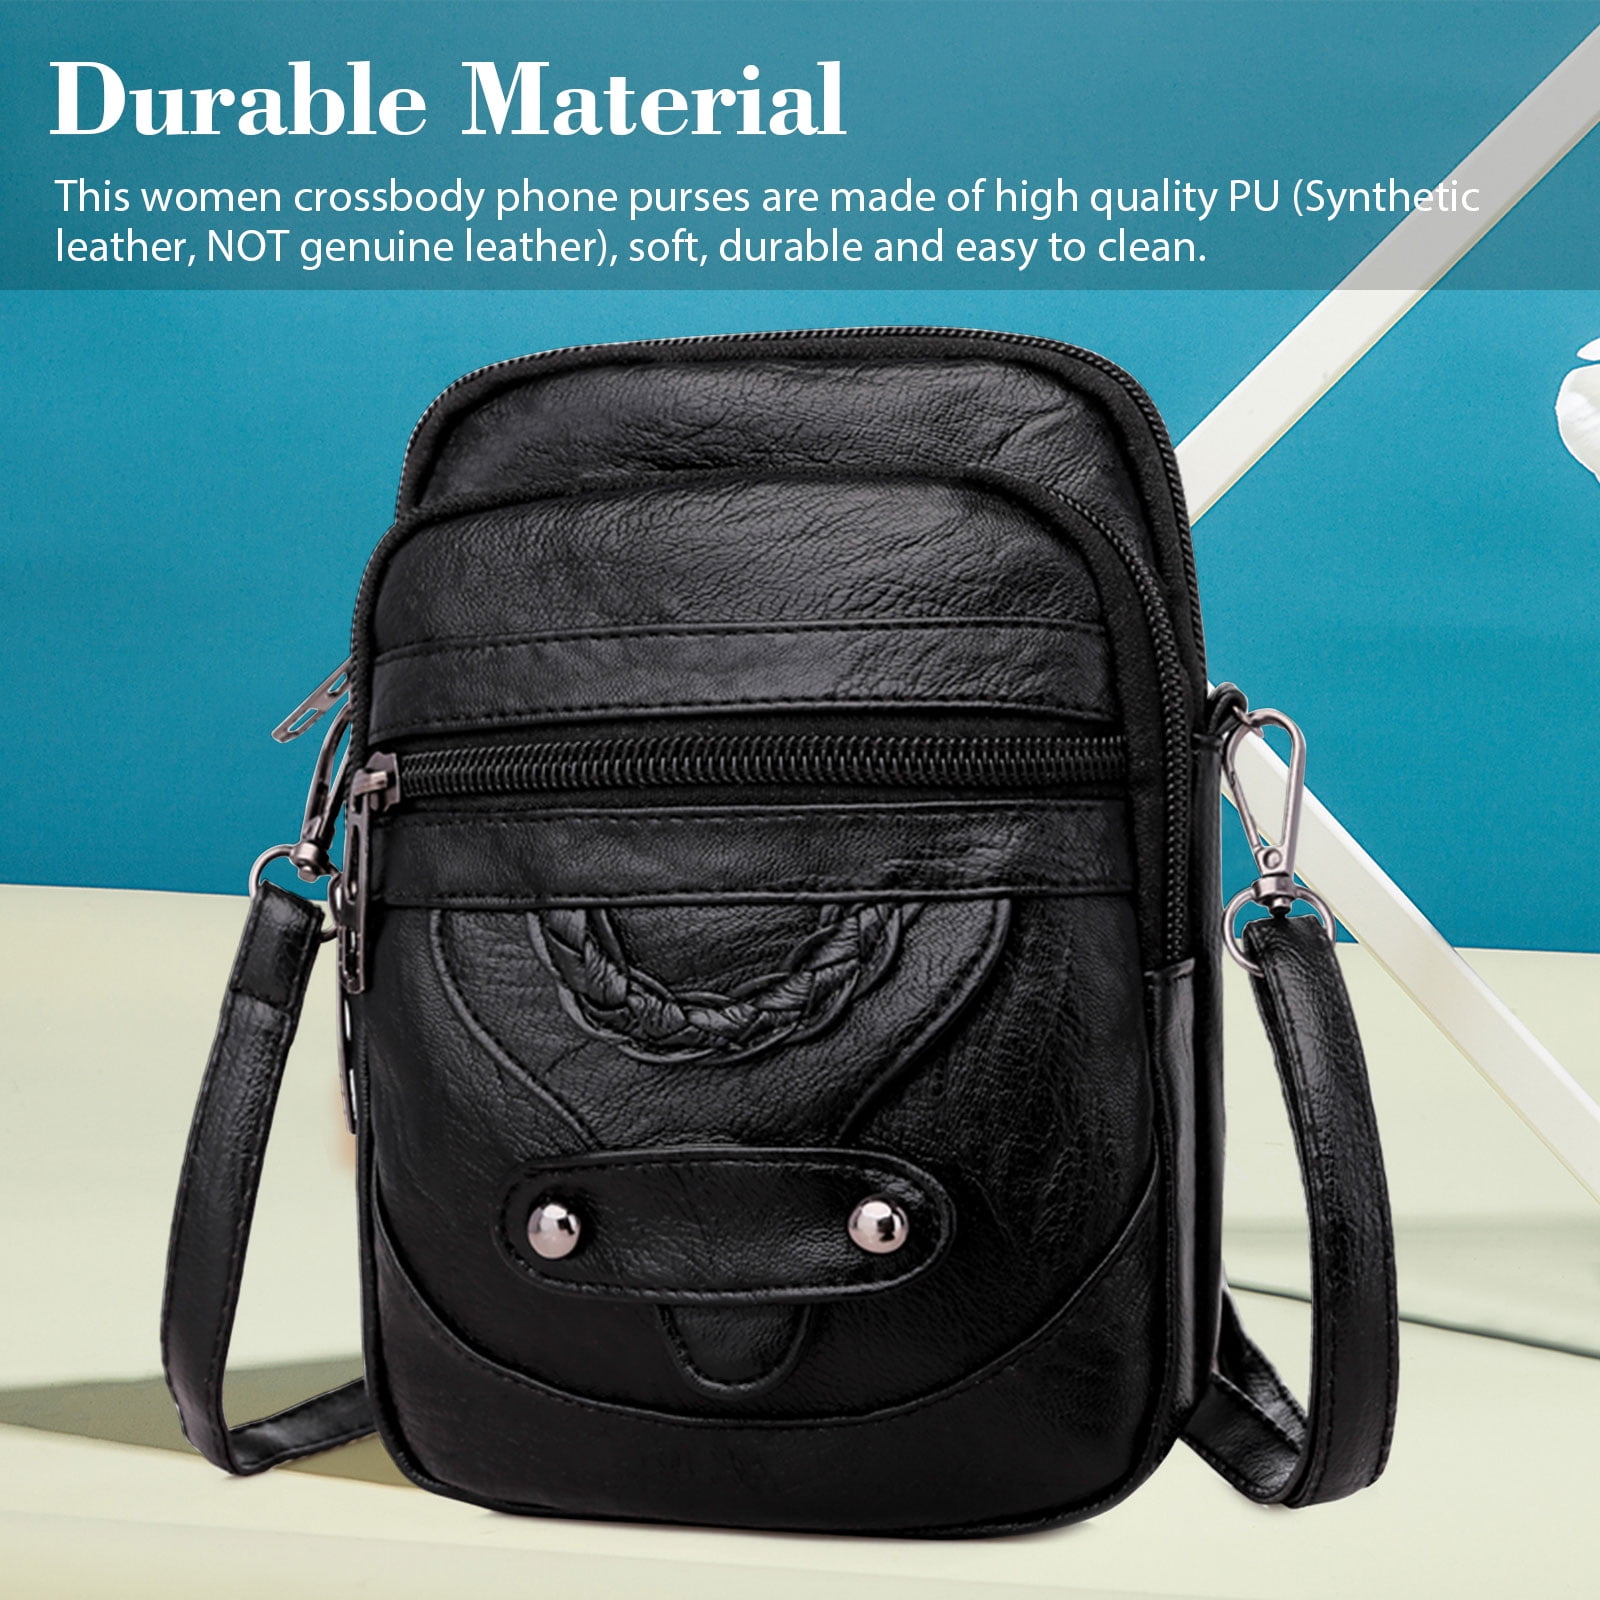 Ladies Soft Crossbody Bags Multi-Pocket Leather Lightweight Shoulder Handbags for Women with Adjustable Shoulder Strap 